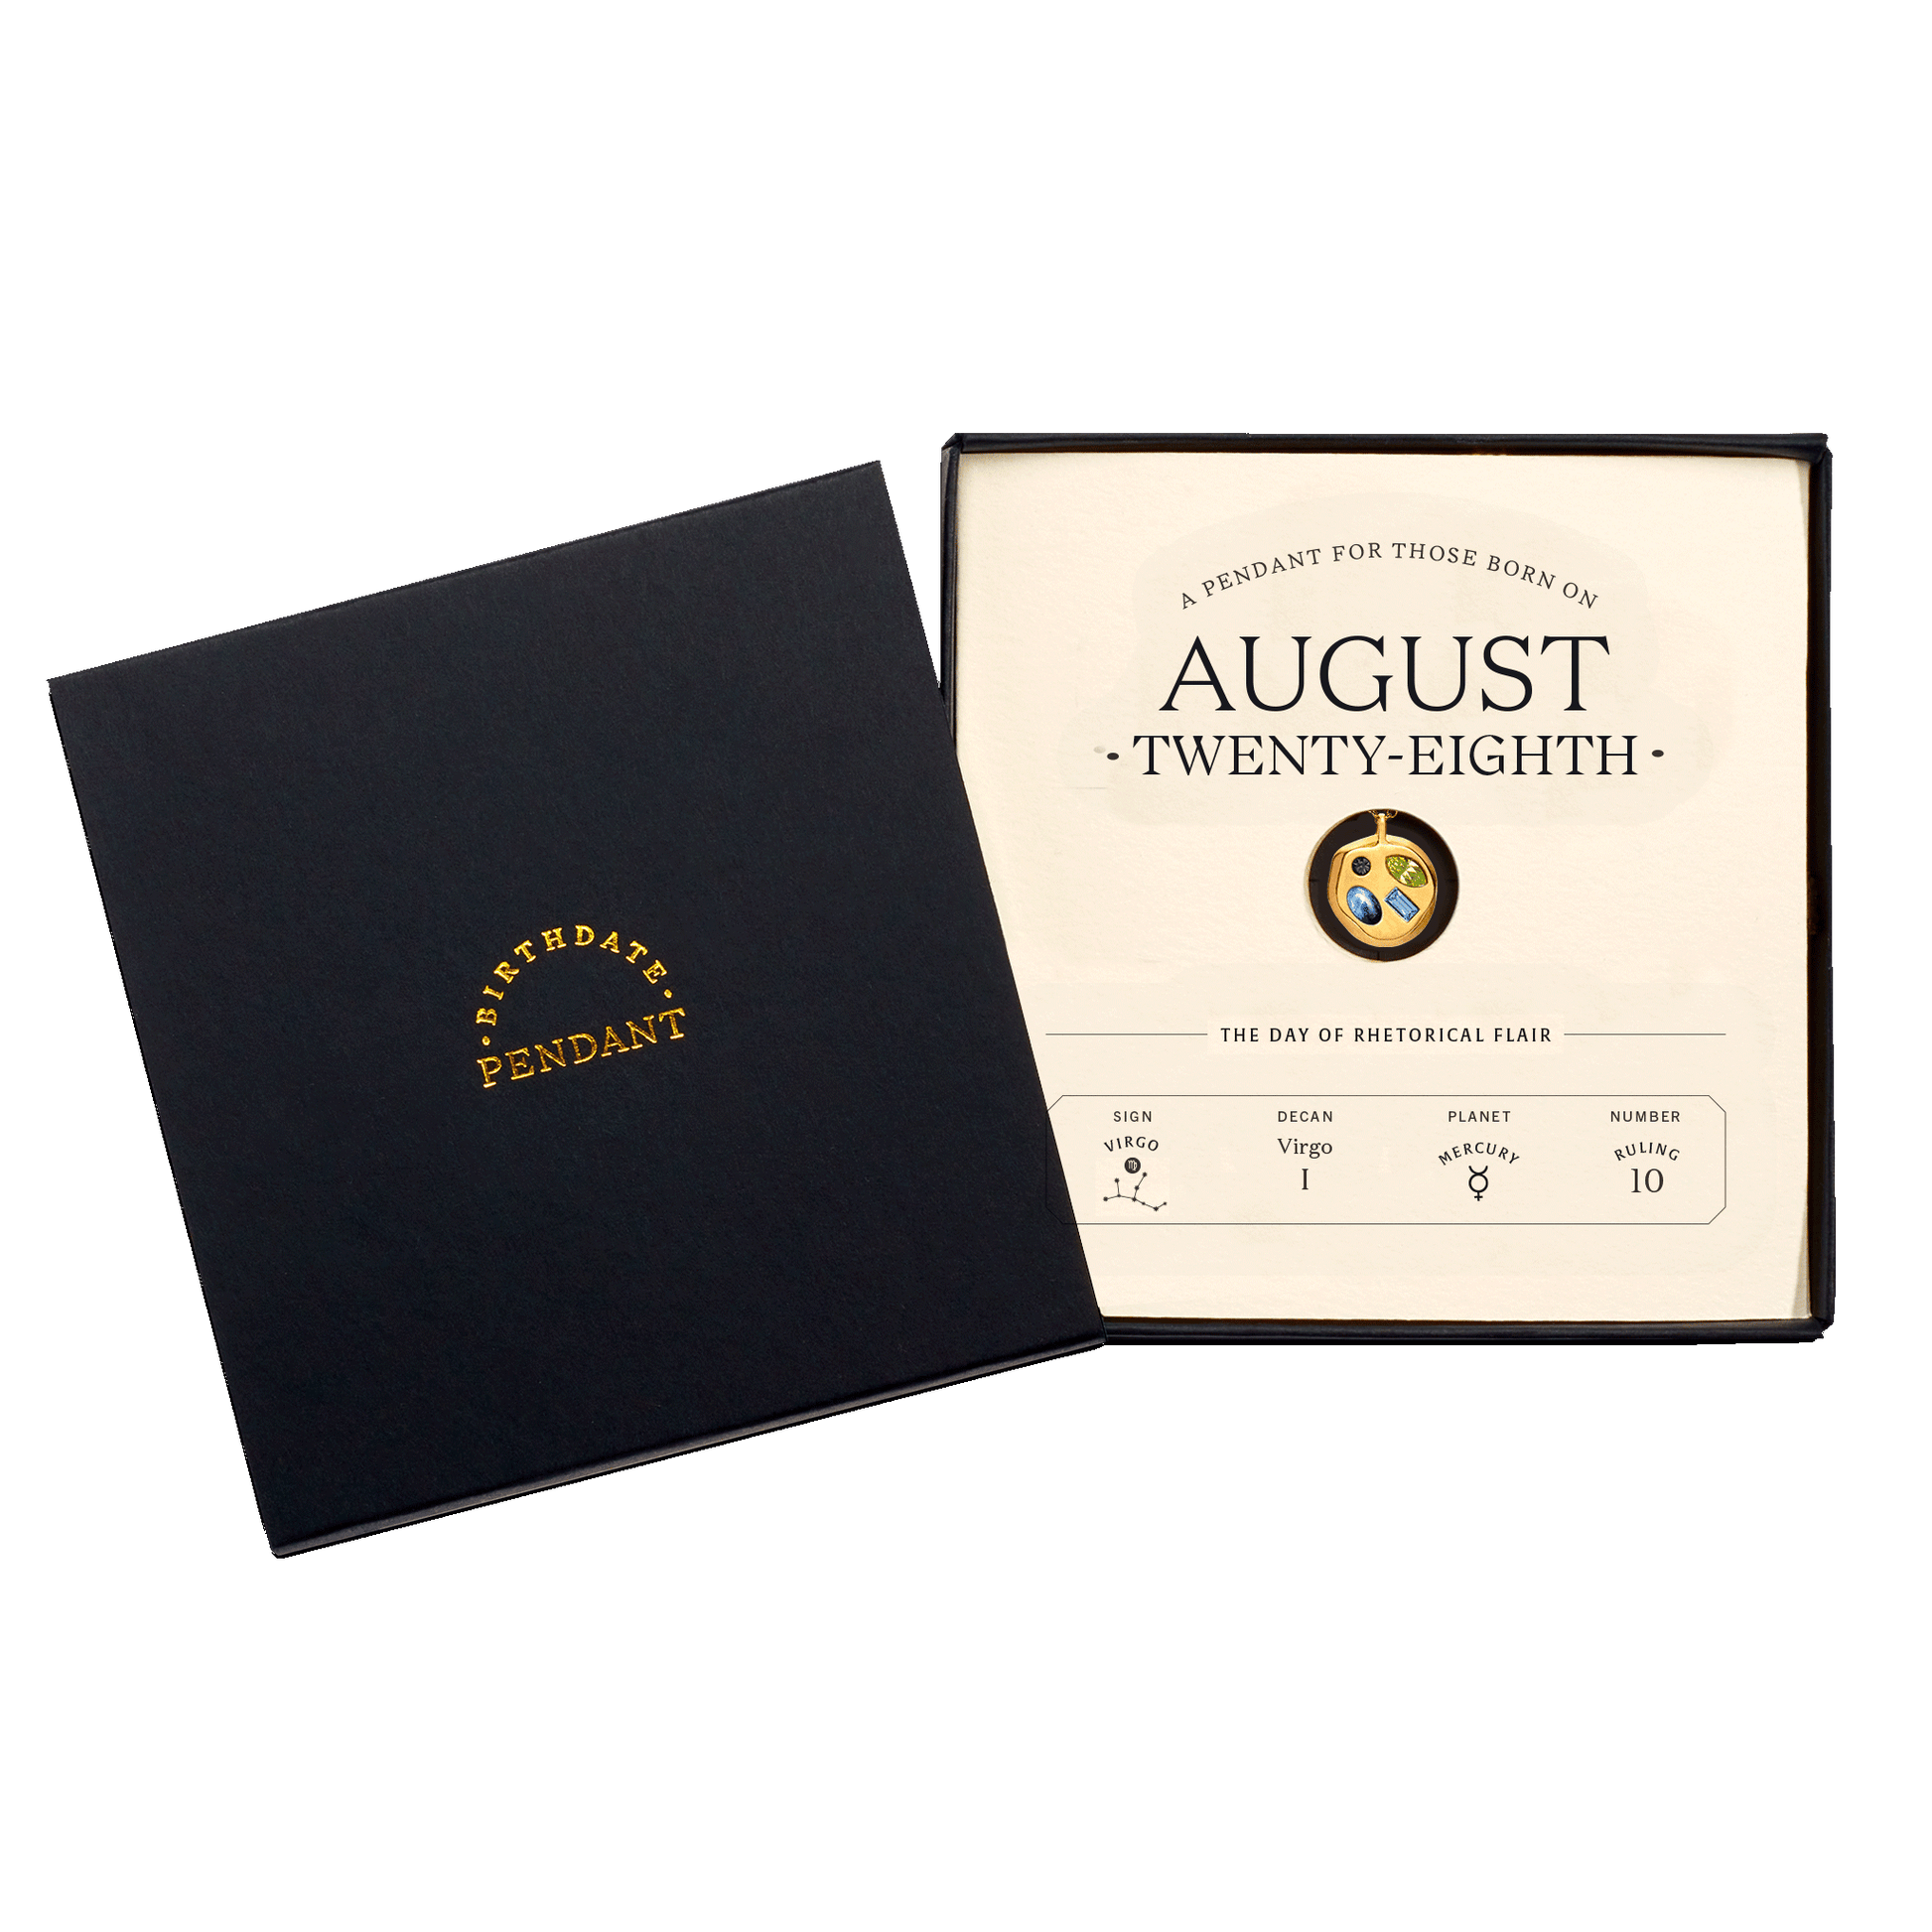 The August Twenty-Eighth Pendant inside its box